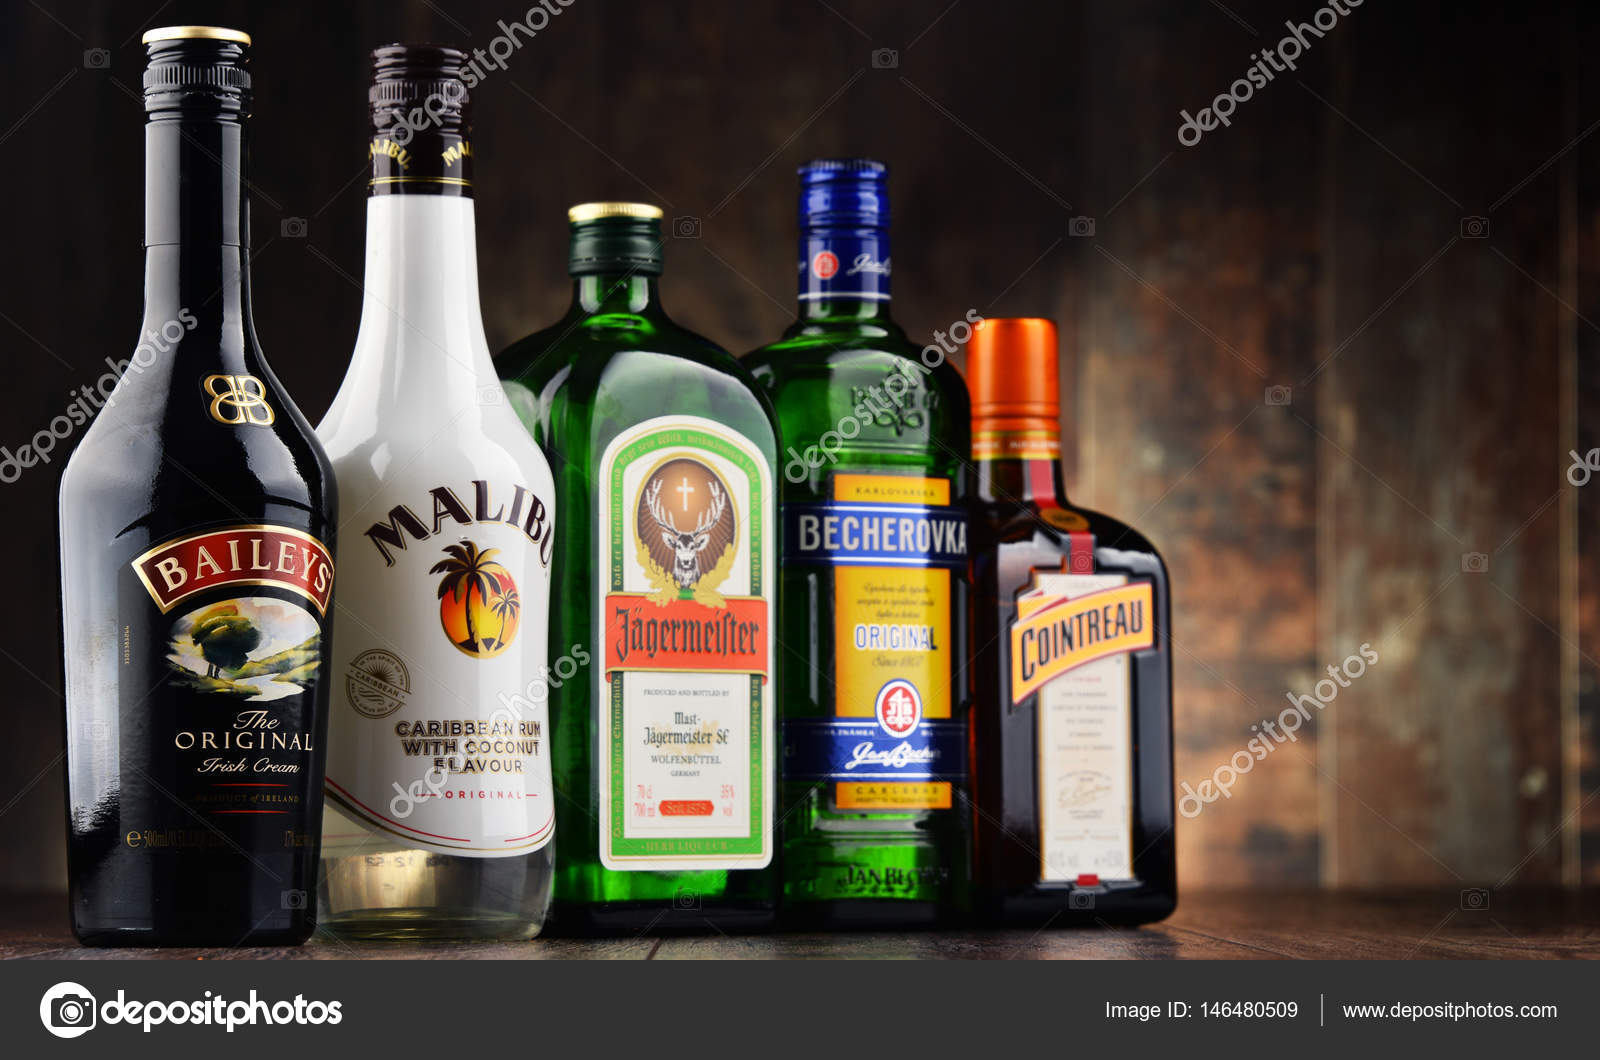 Jagermeister liquor fotografías e imágenes de alta resolución - Alamy